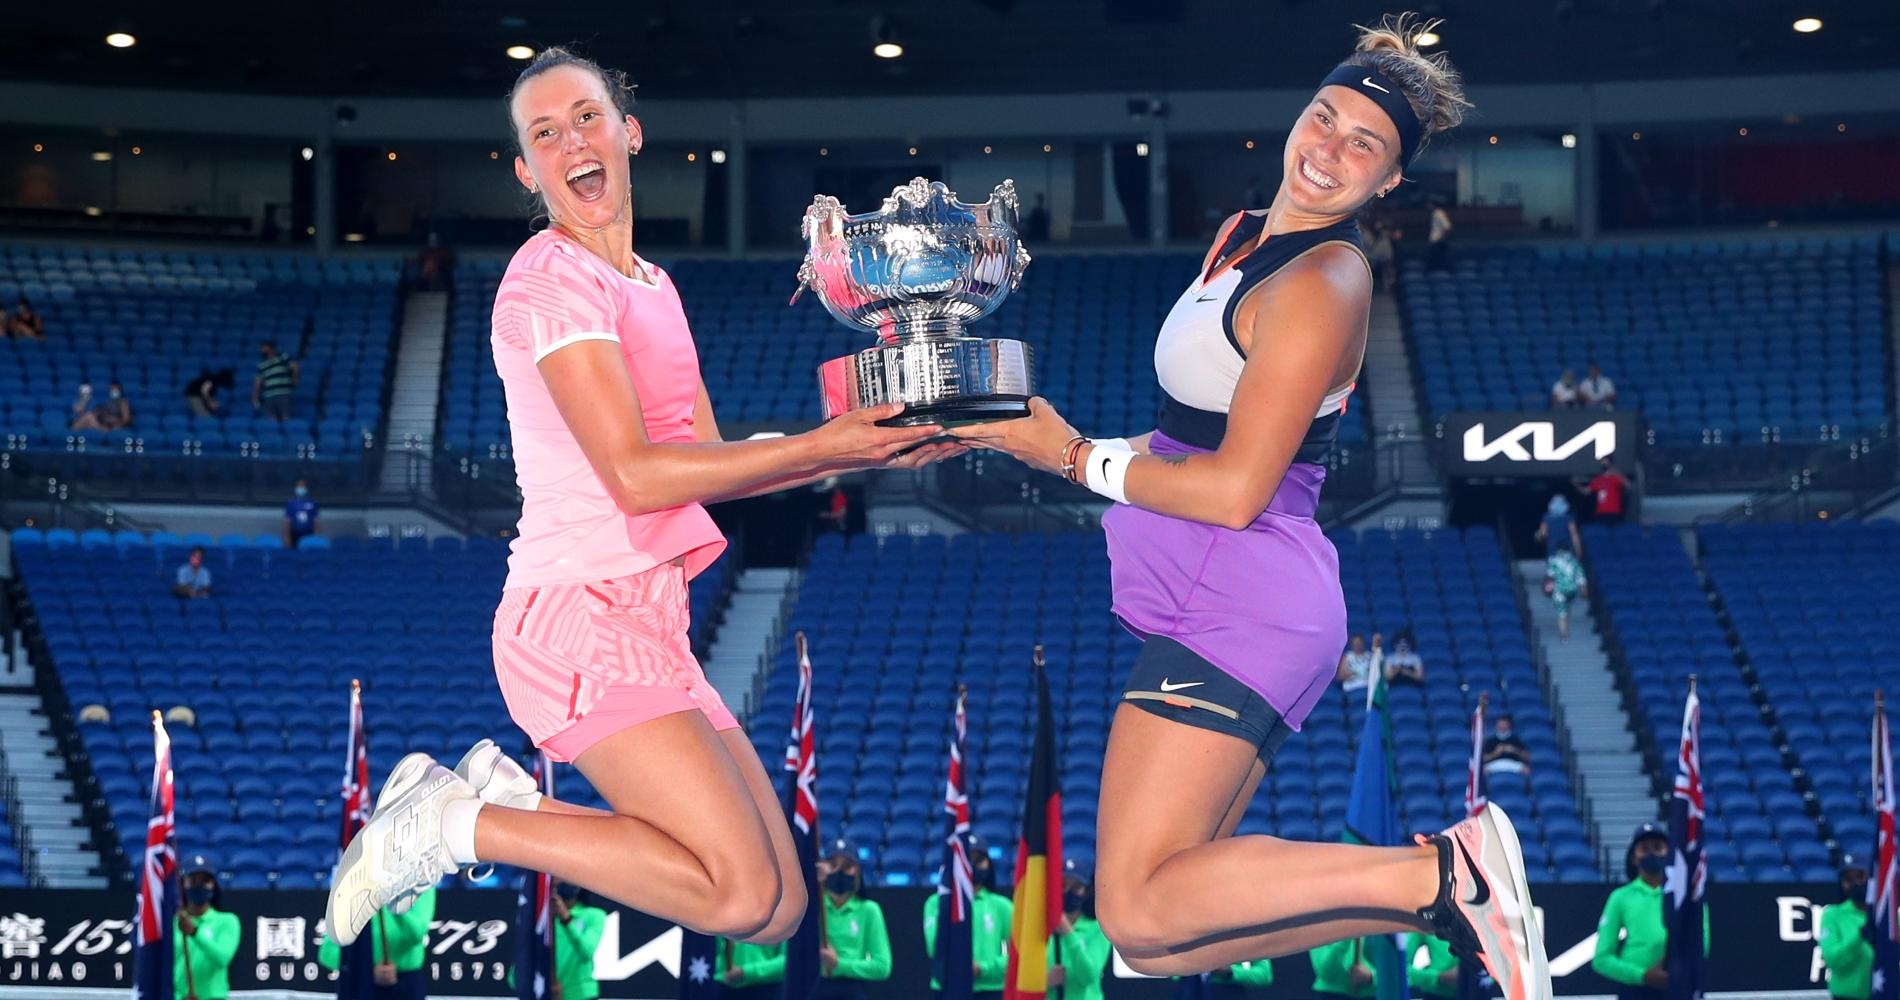 Elise Mertens & Aryna Sabalenka, Women's Doubles champions, 2021 Australian Open